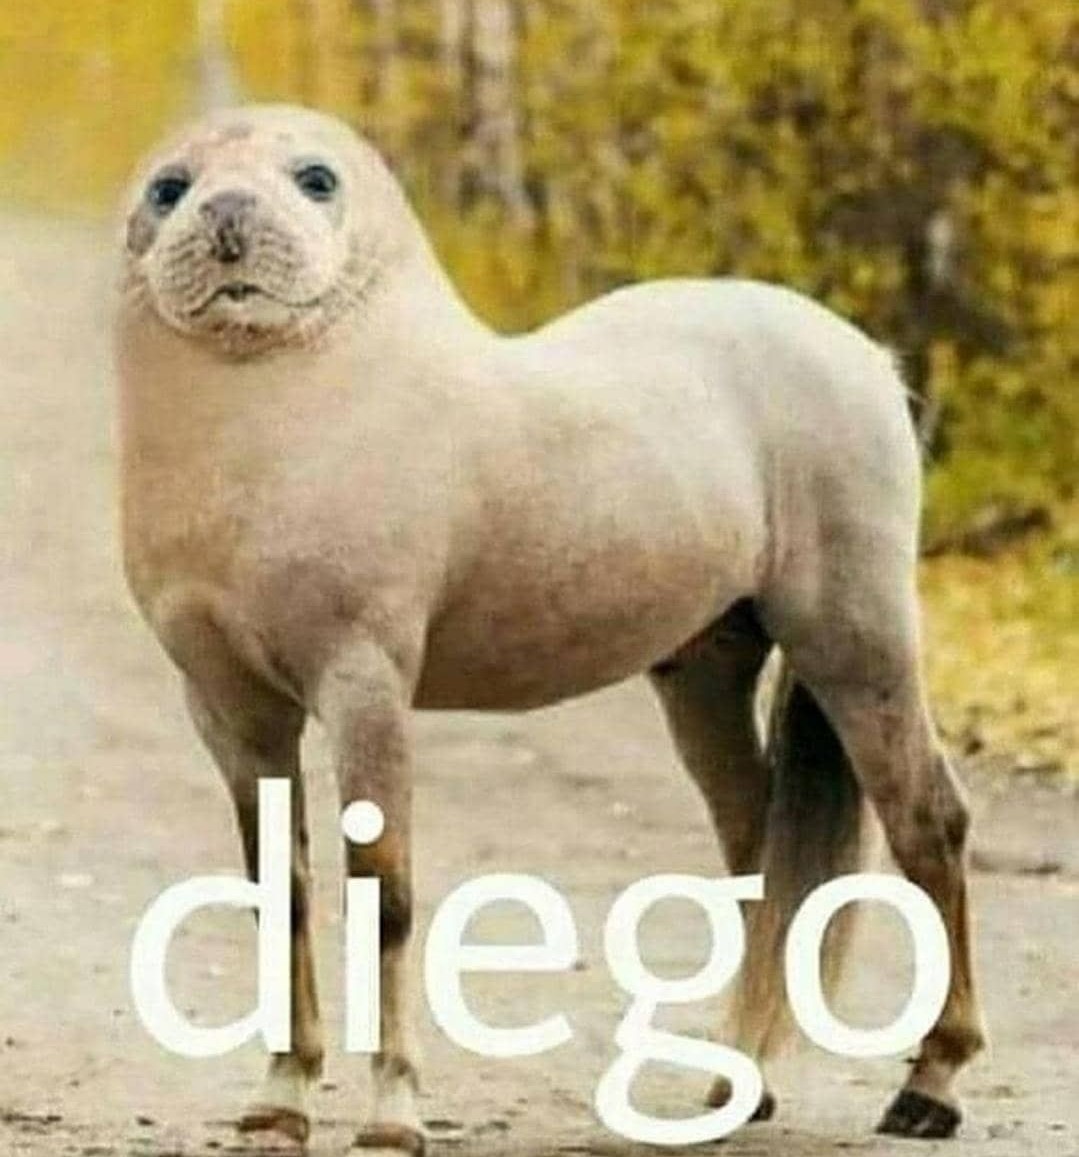 Diego - meme